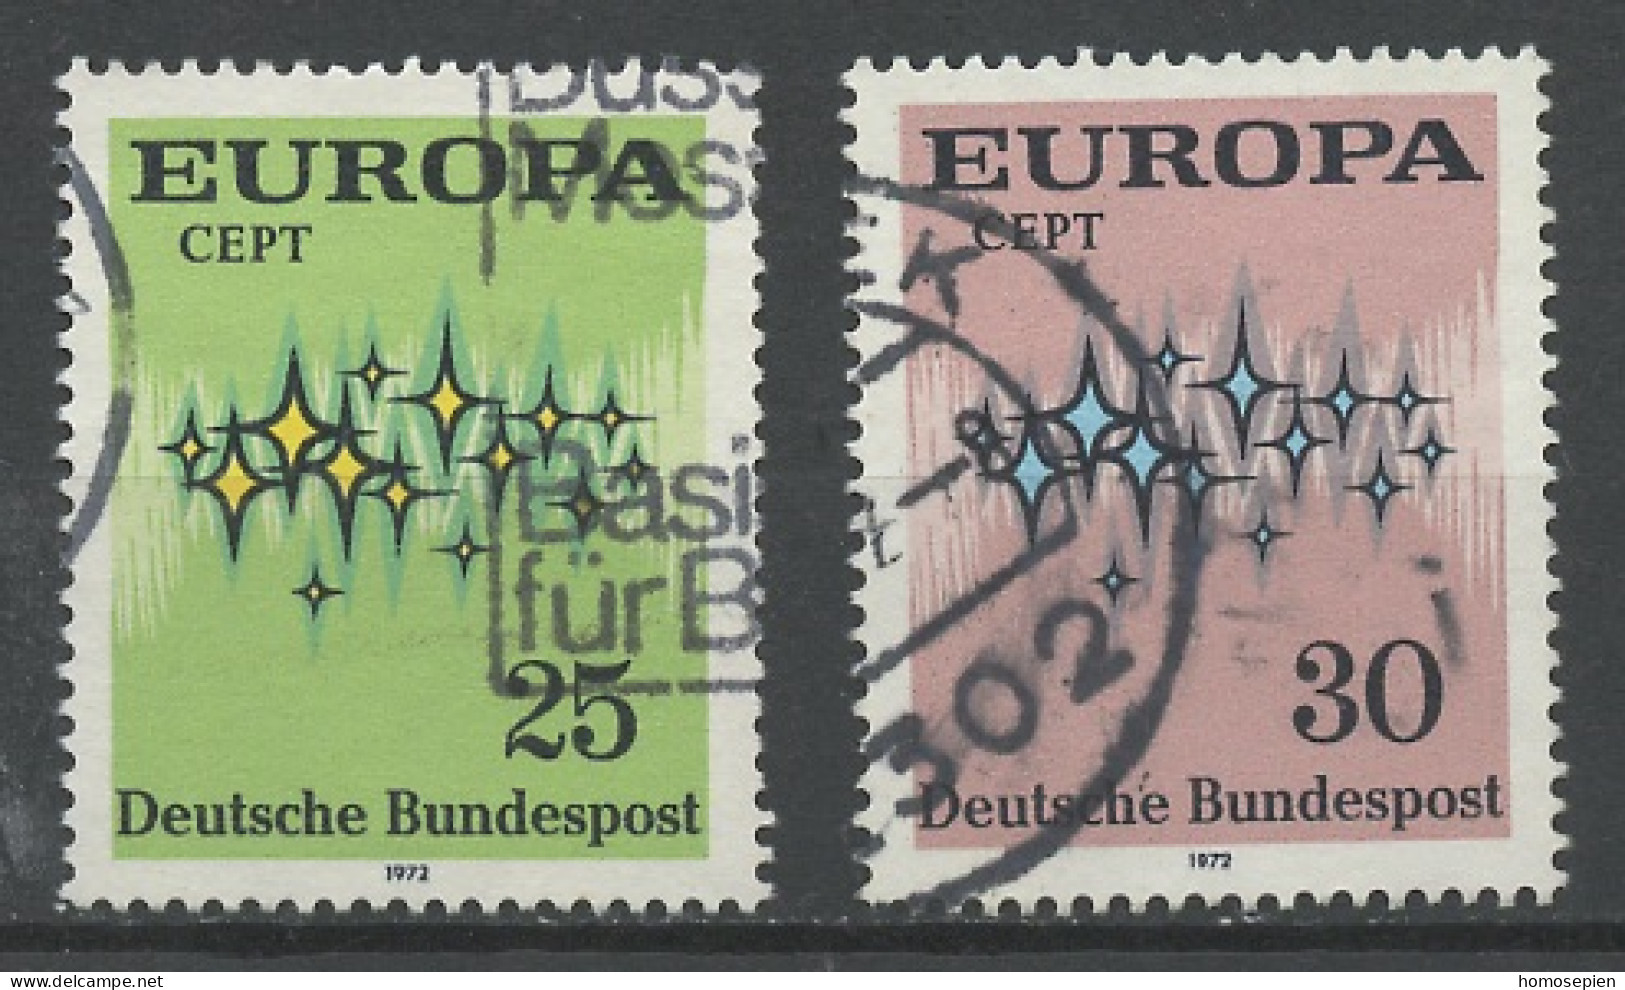 Europa CEPT 1972 Allemagne Fédérale - Germany - Deutschland Y&T N°567 à 568 - Michel N°716 à 717 (o) - 1972